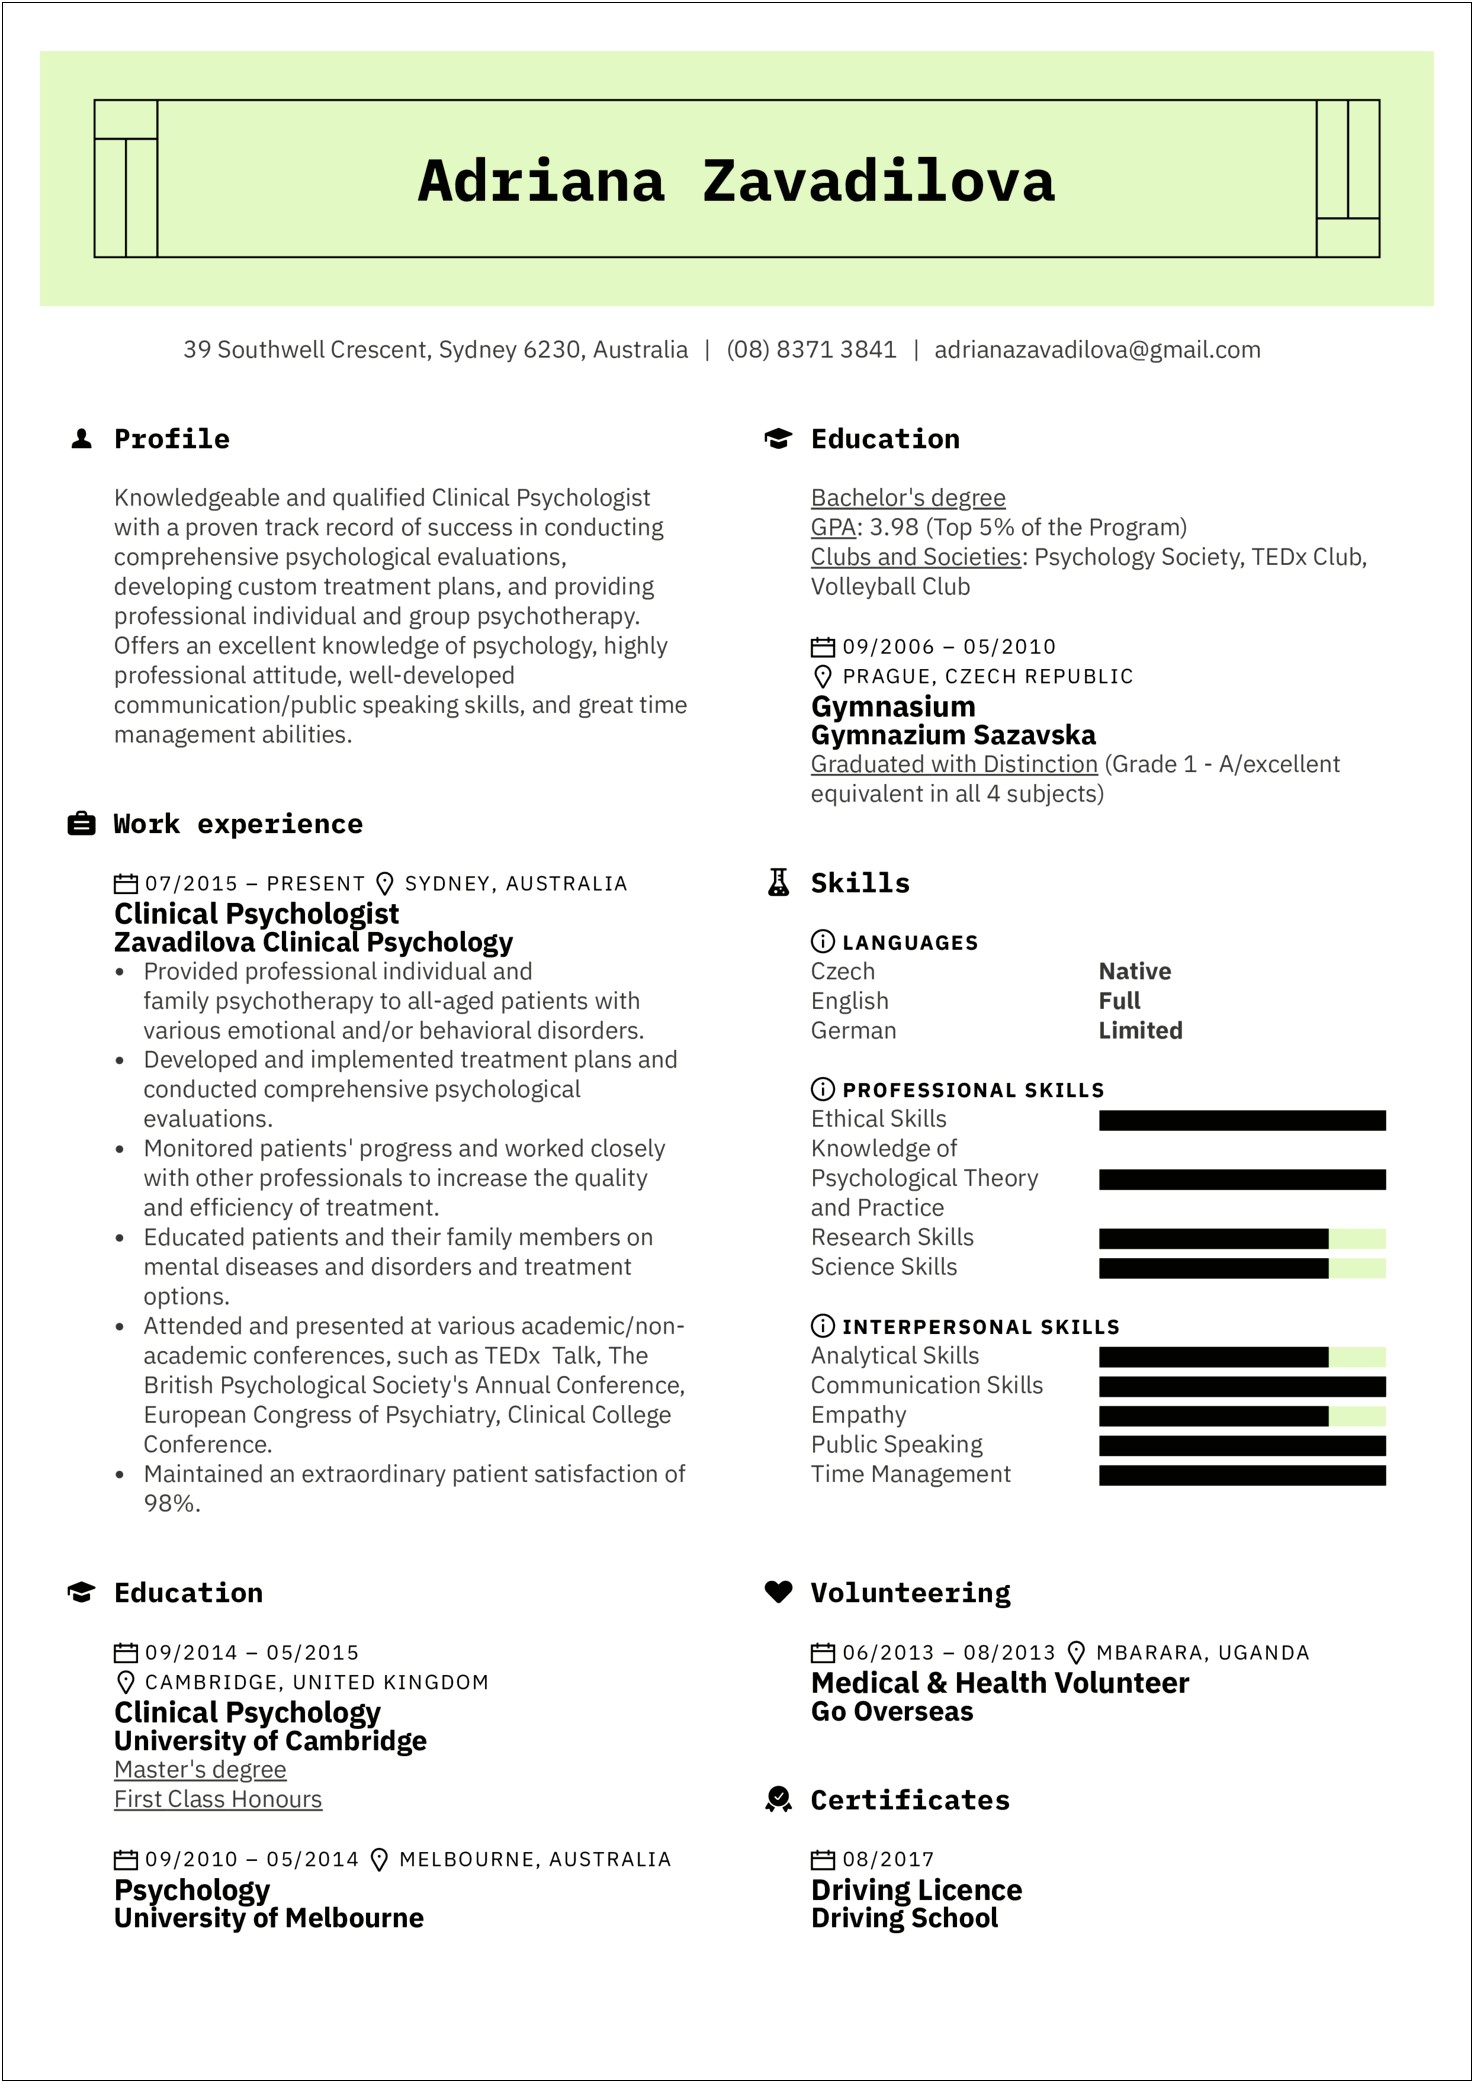 Mental Health Clinicals Description For A Resume